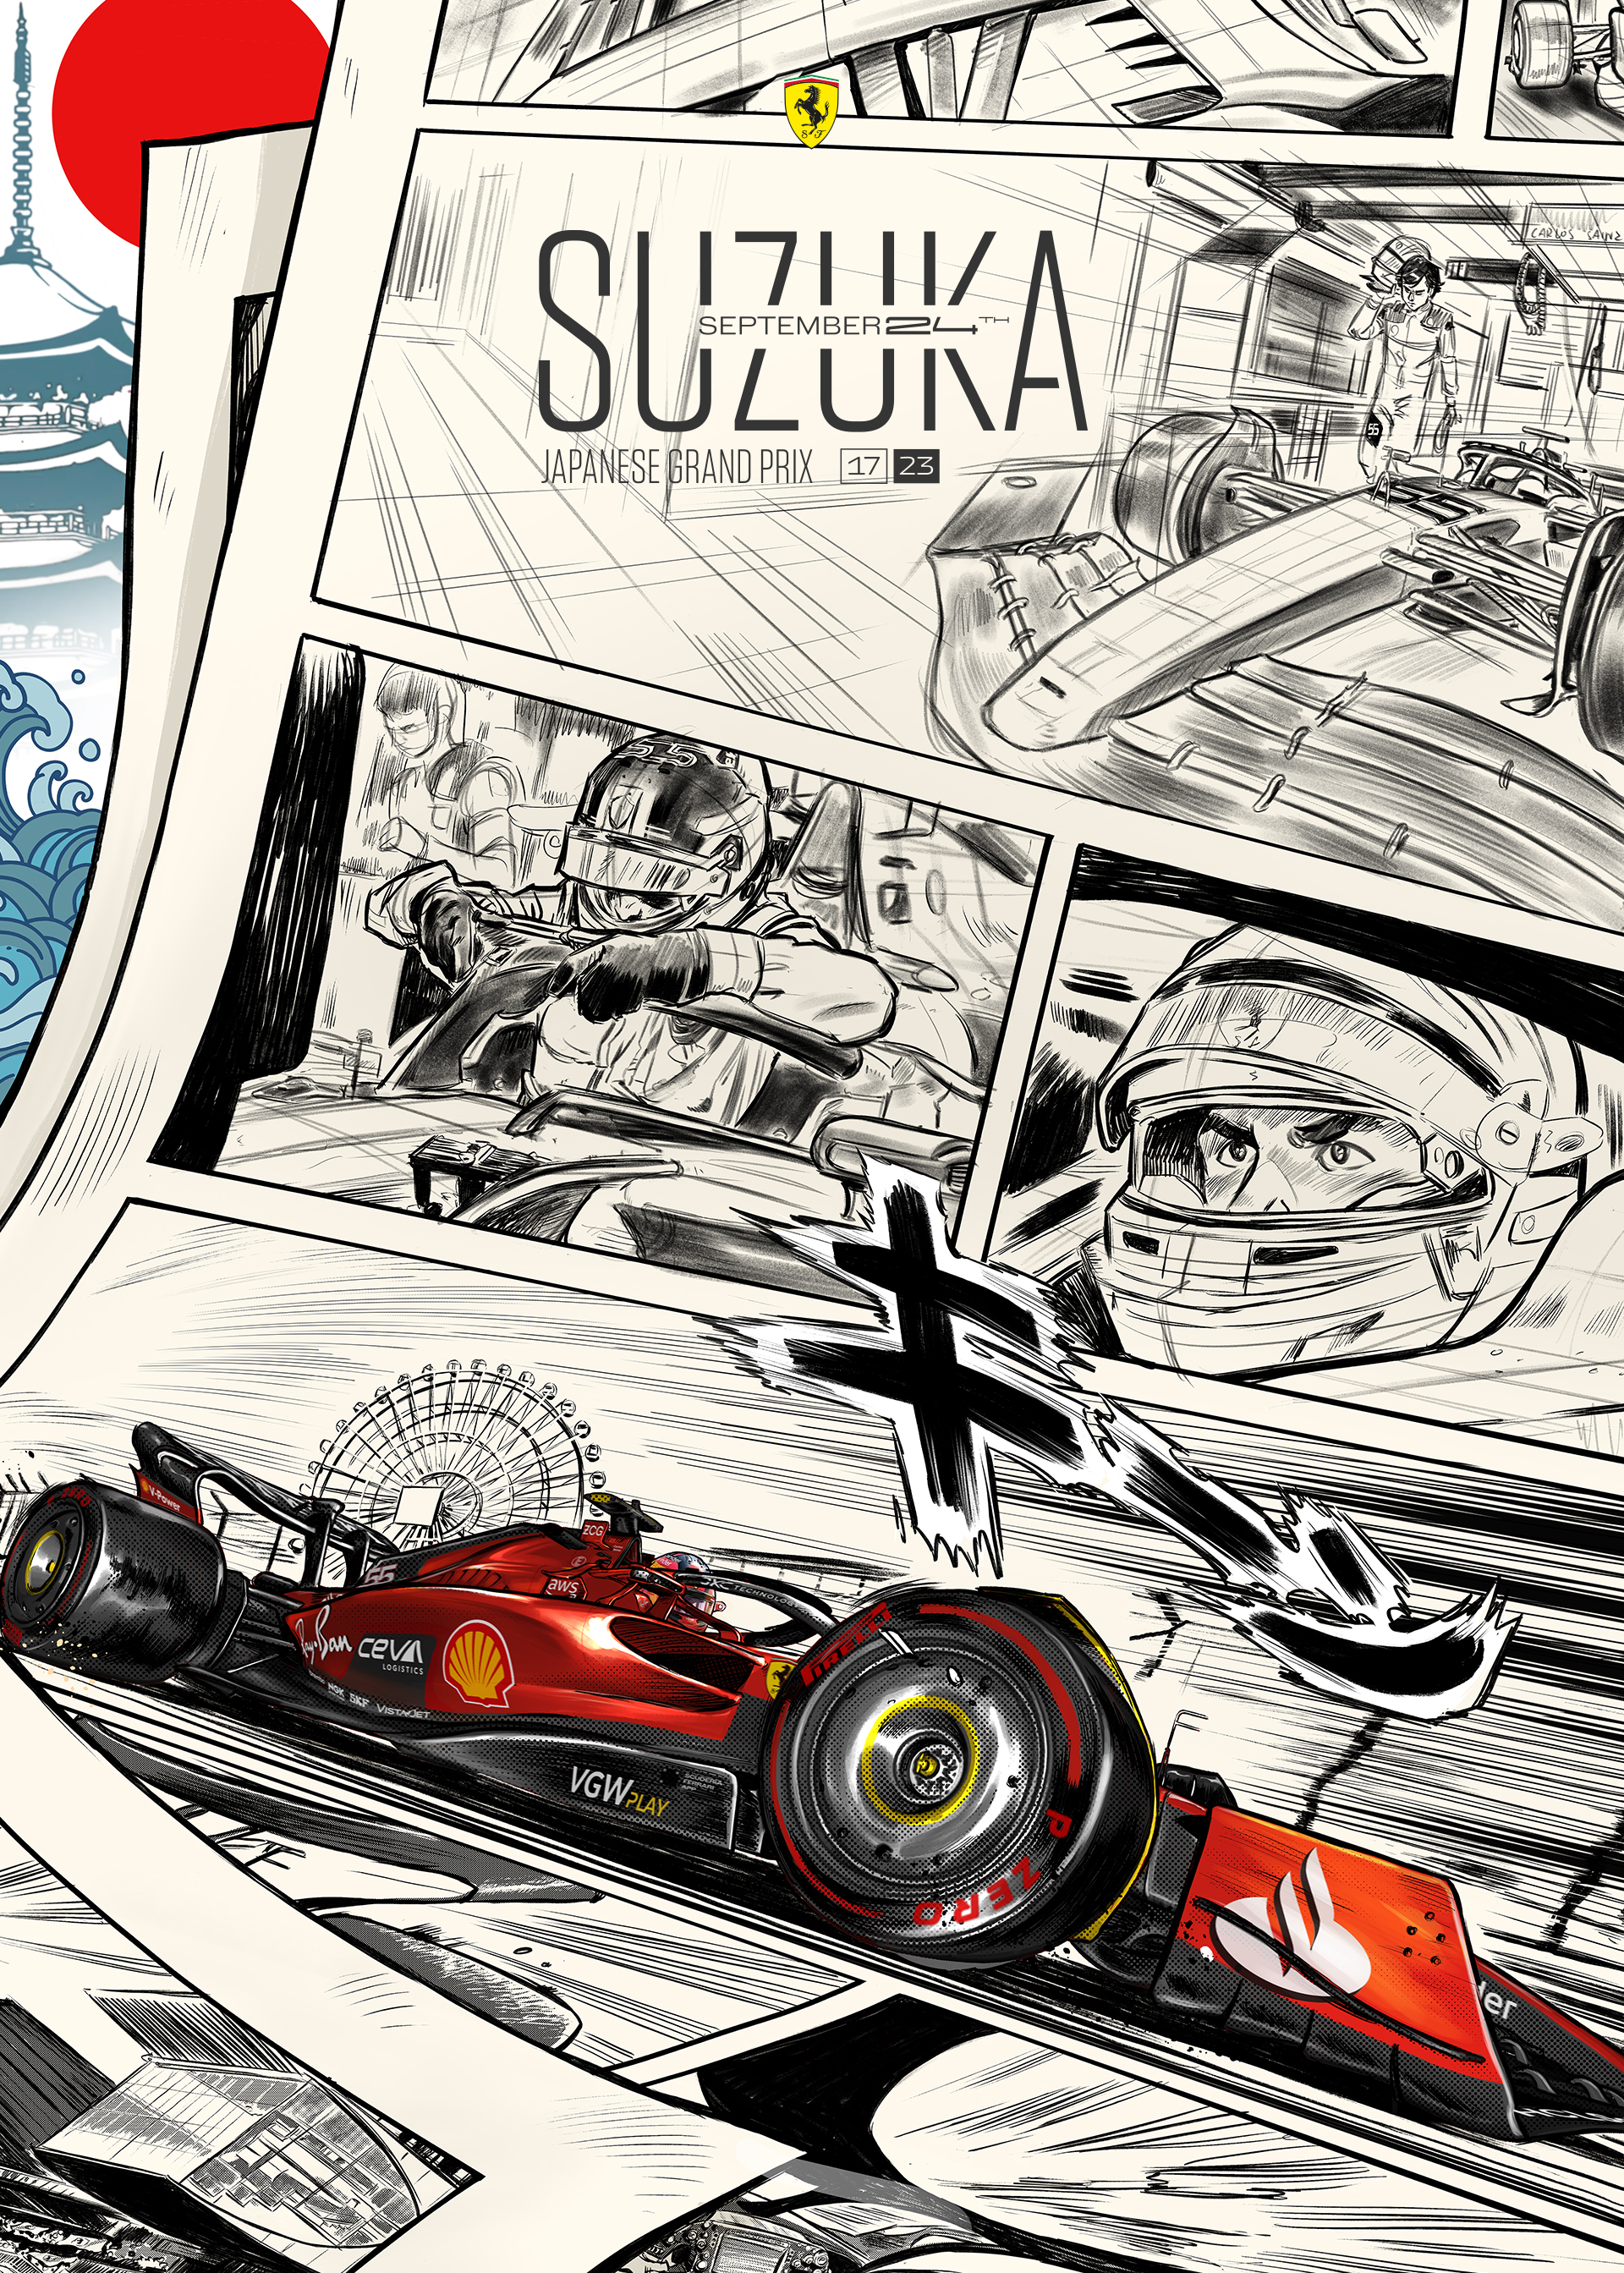 2023 Ferrari F1 RACE 17 Japan grand prix race cover art poster